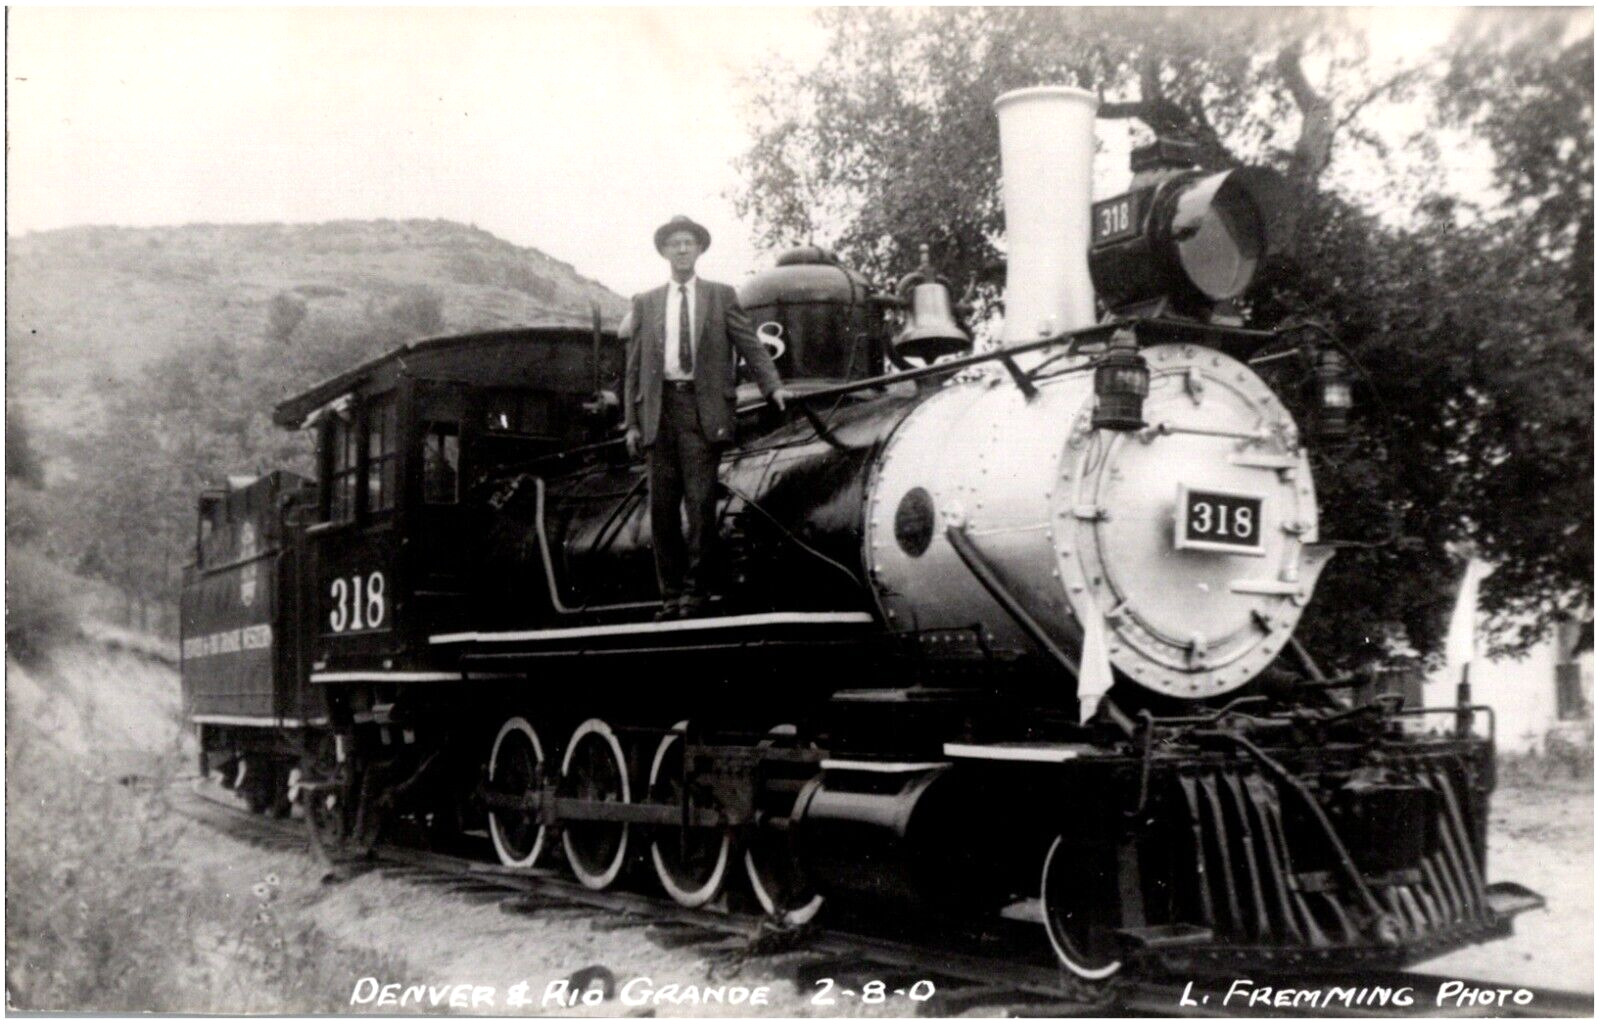 Man On Train 318 Denver & Rio Grande Western Railroad Colorado 1950s RPPC Photo